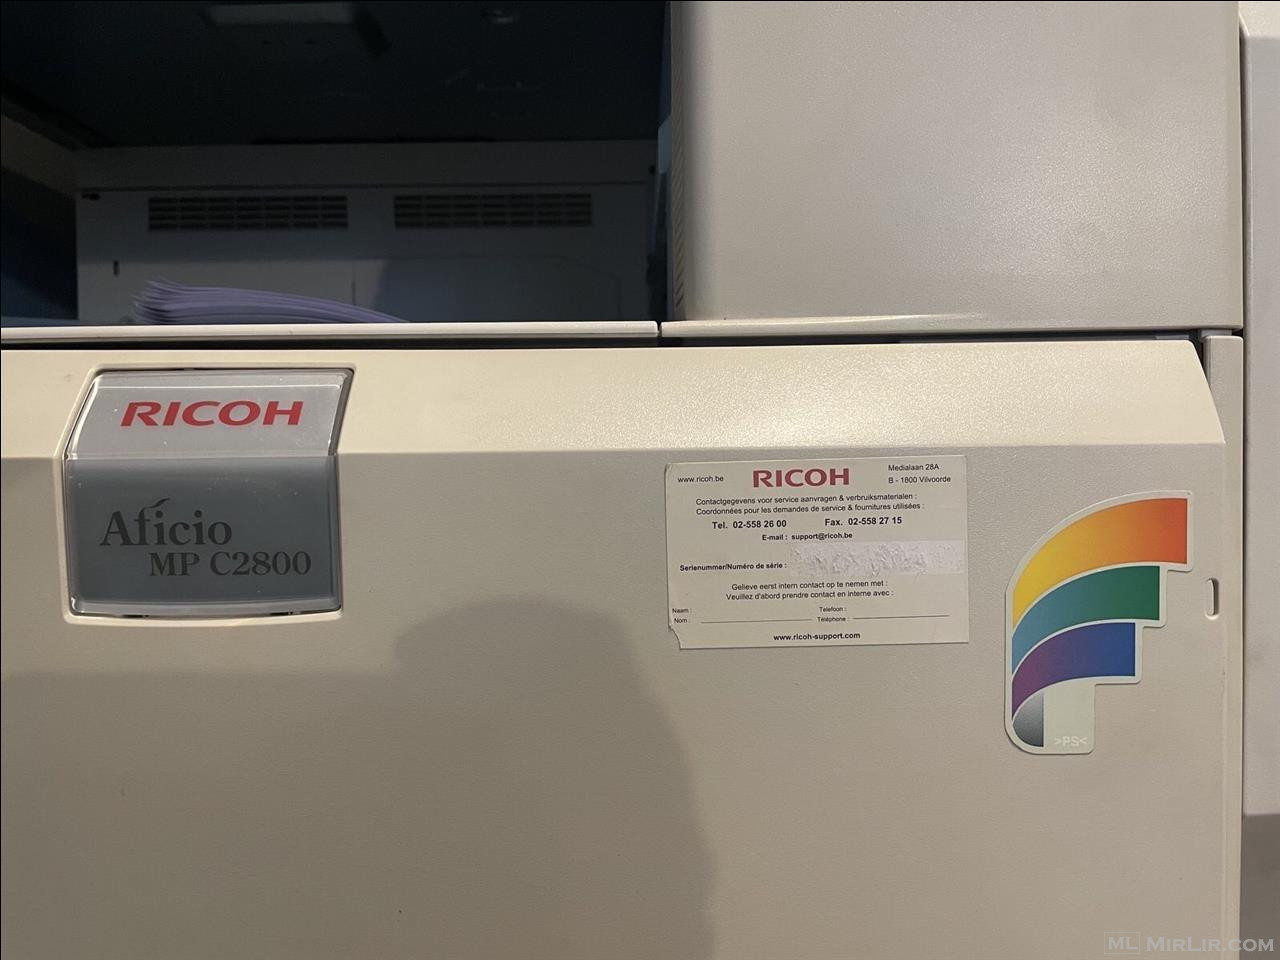 Printer RICHO Aficio MP C2800